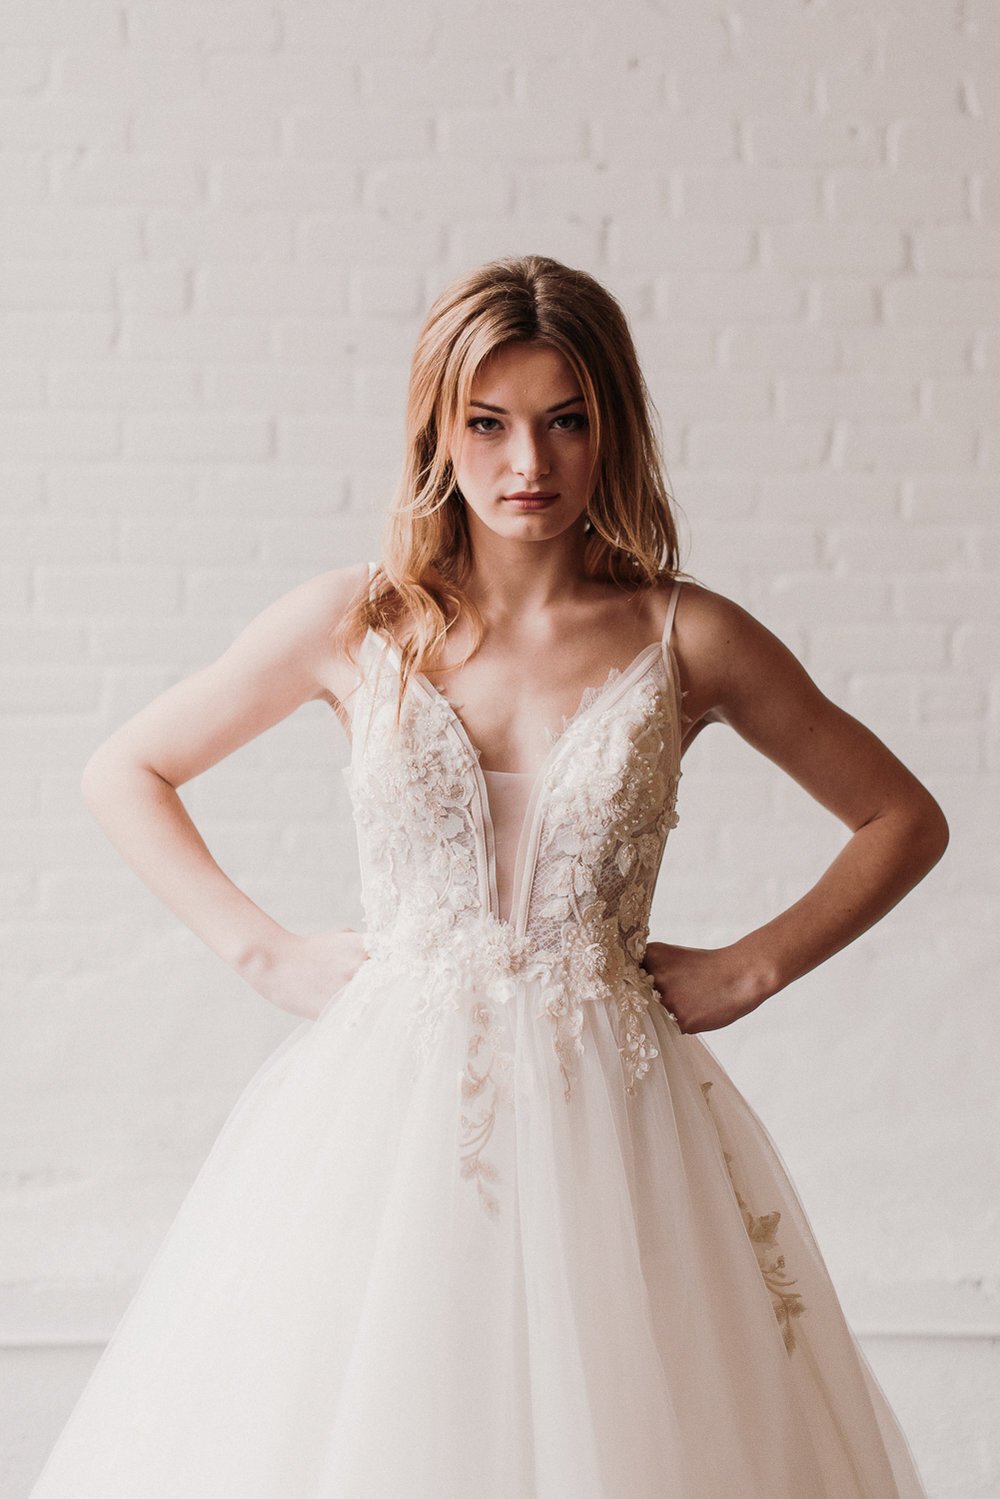 6 Alternative Wedding Gowns That Are Under $1,000